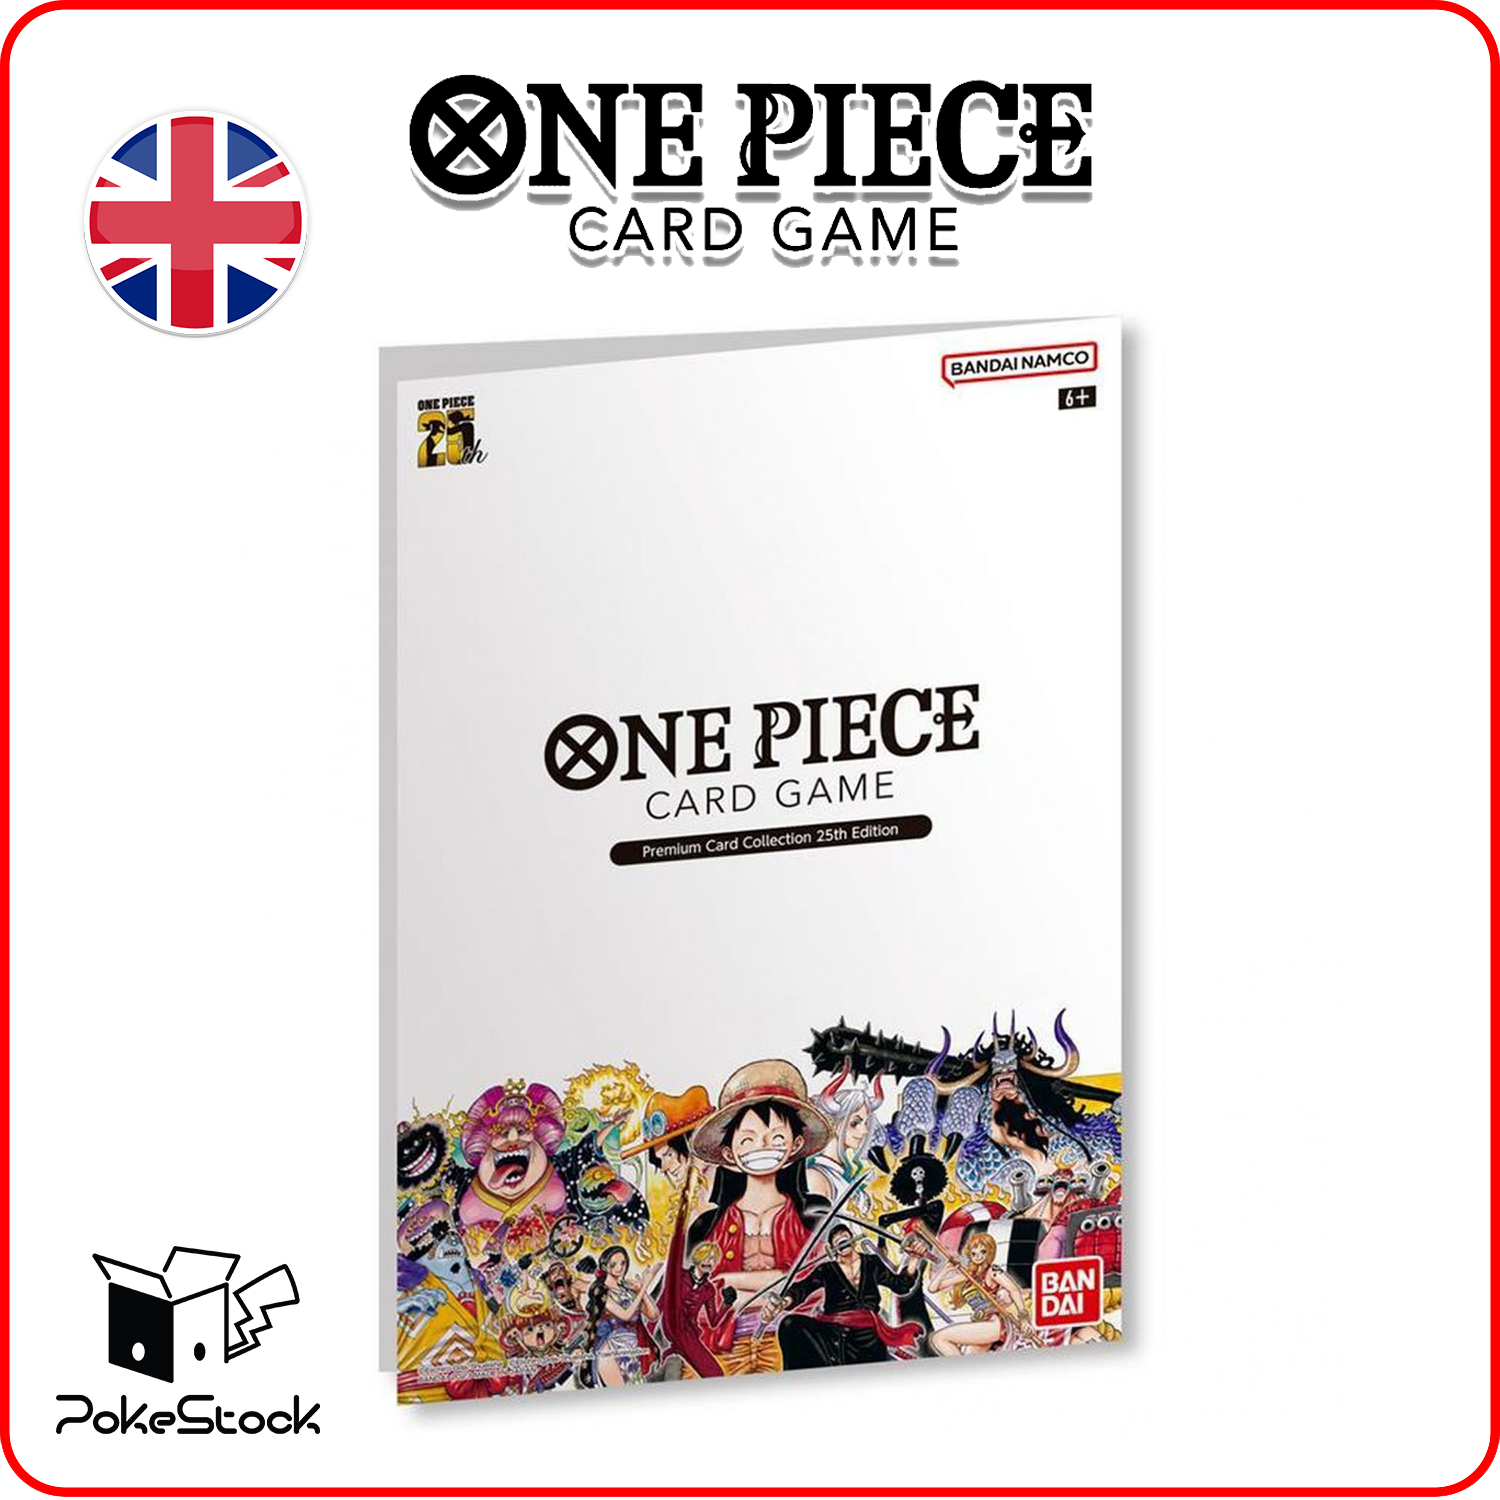 One Piece TCG - One Piece CG - Coffret - Premium Card Collection